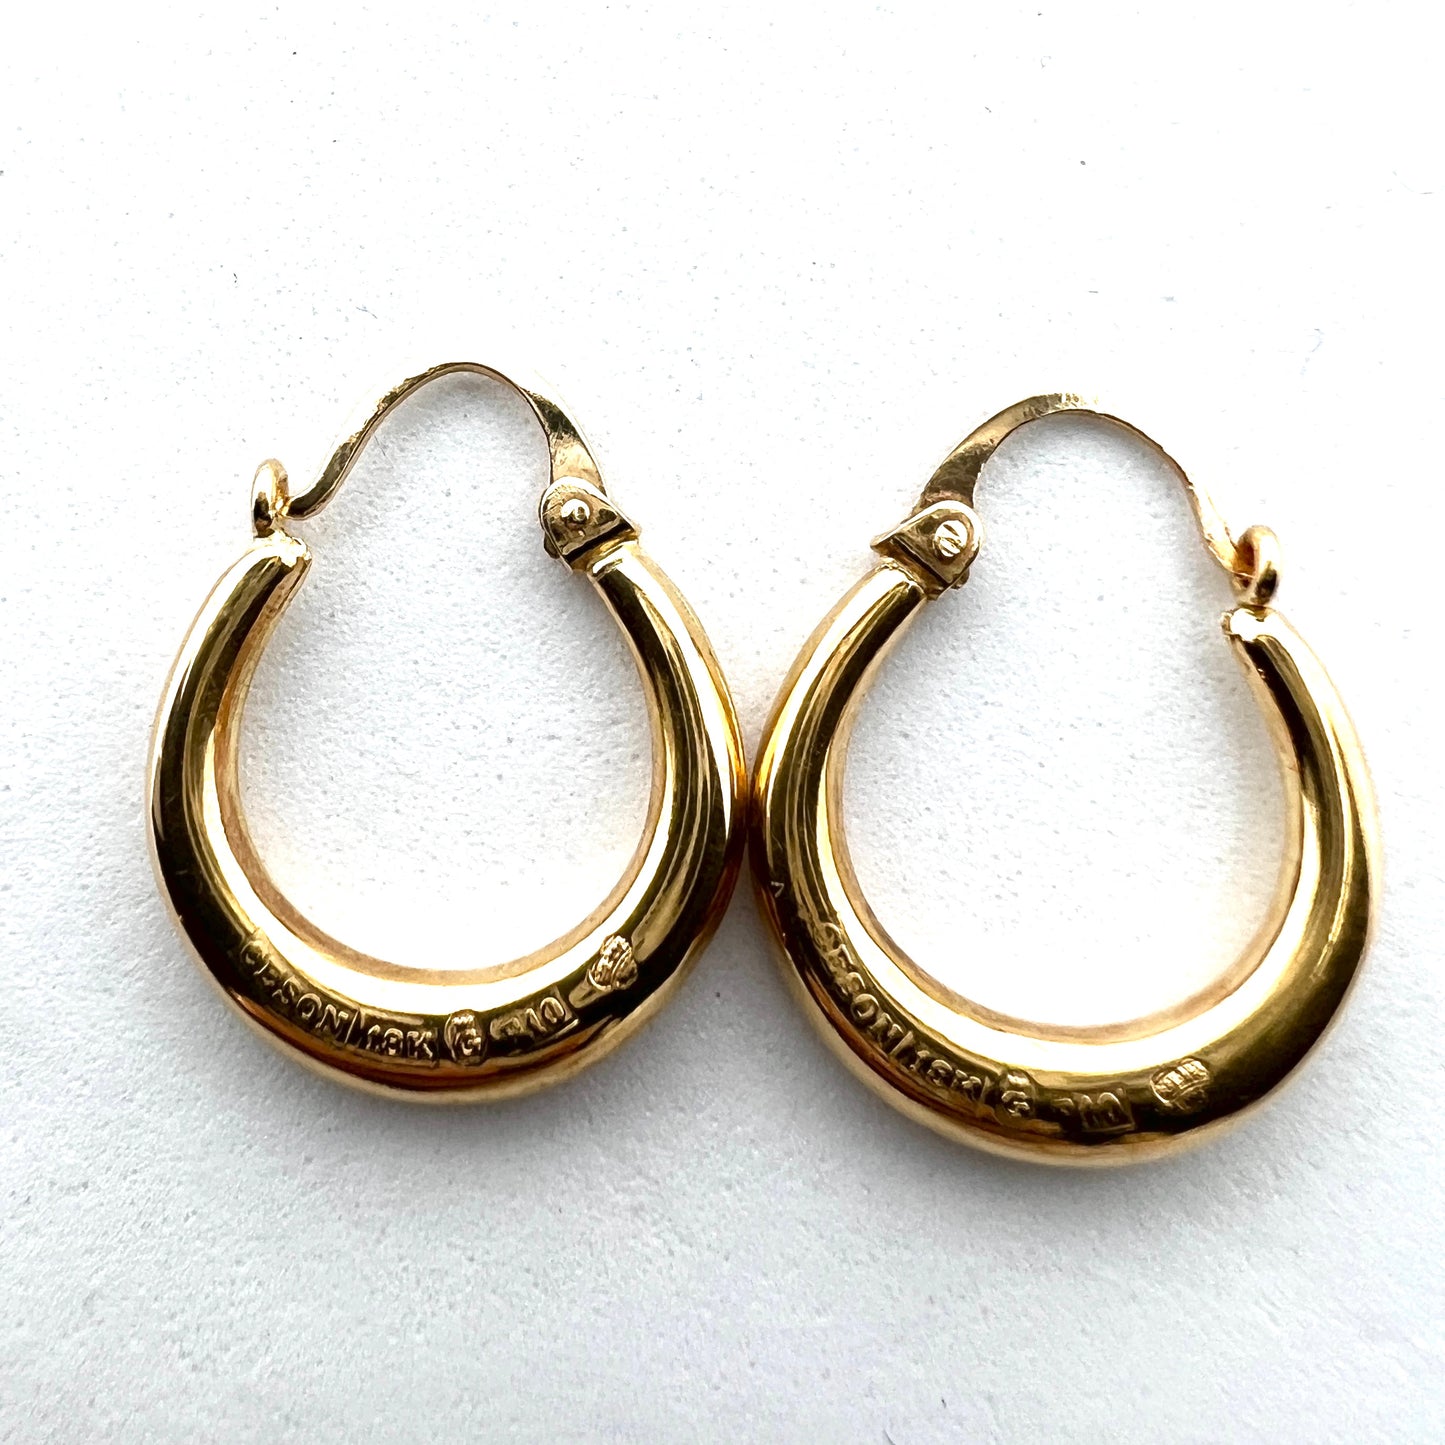 Ceson, Sweden year 1980. Vintage 18k Gold Earrings.